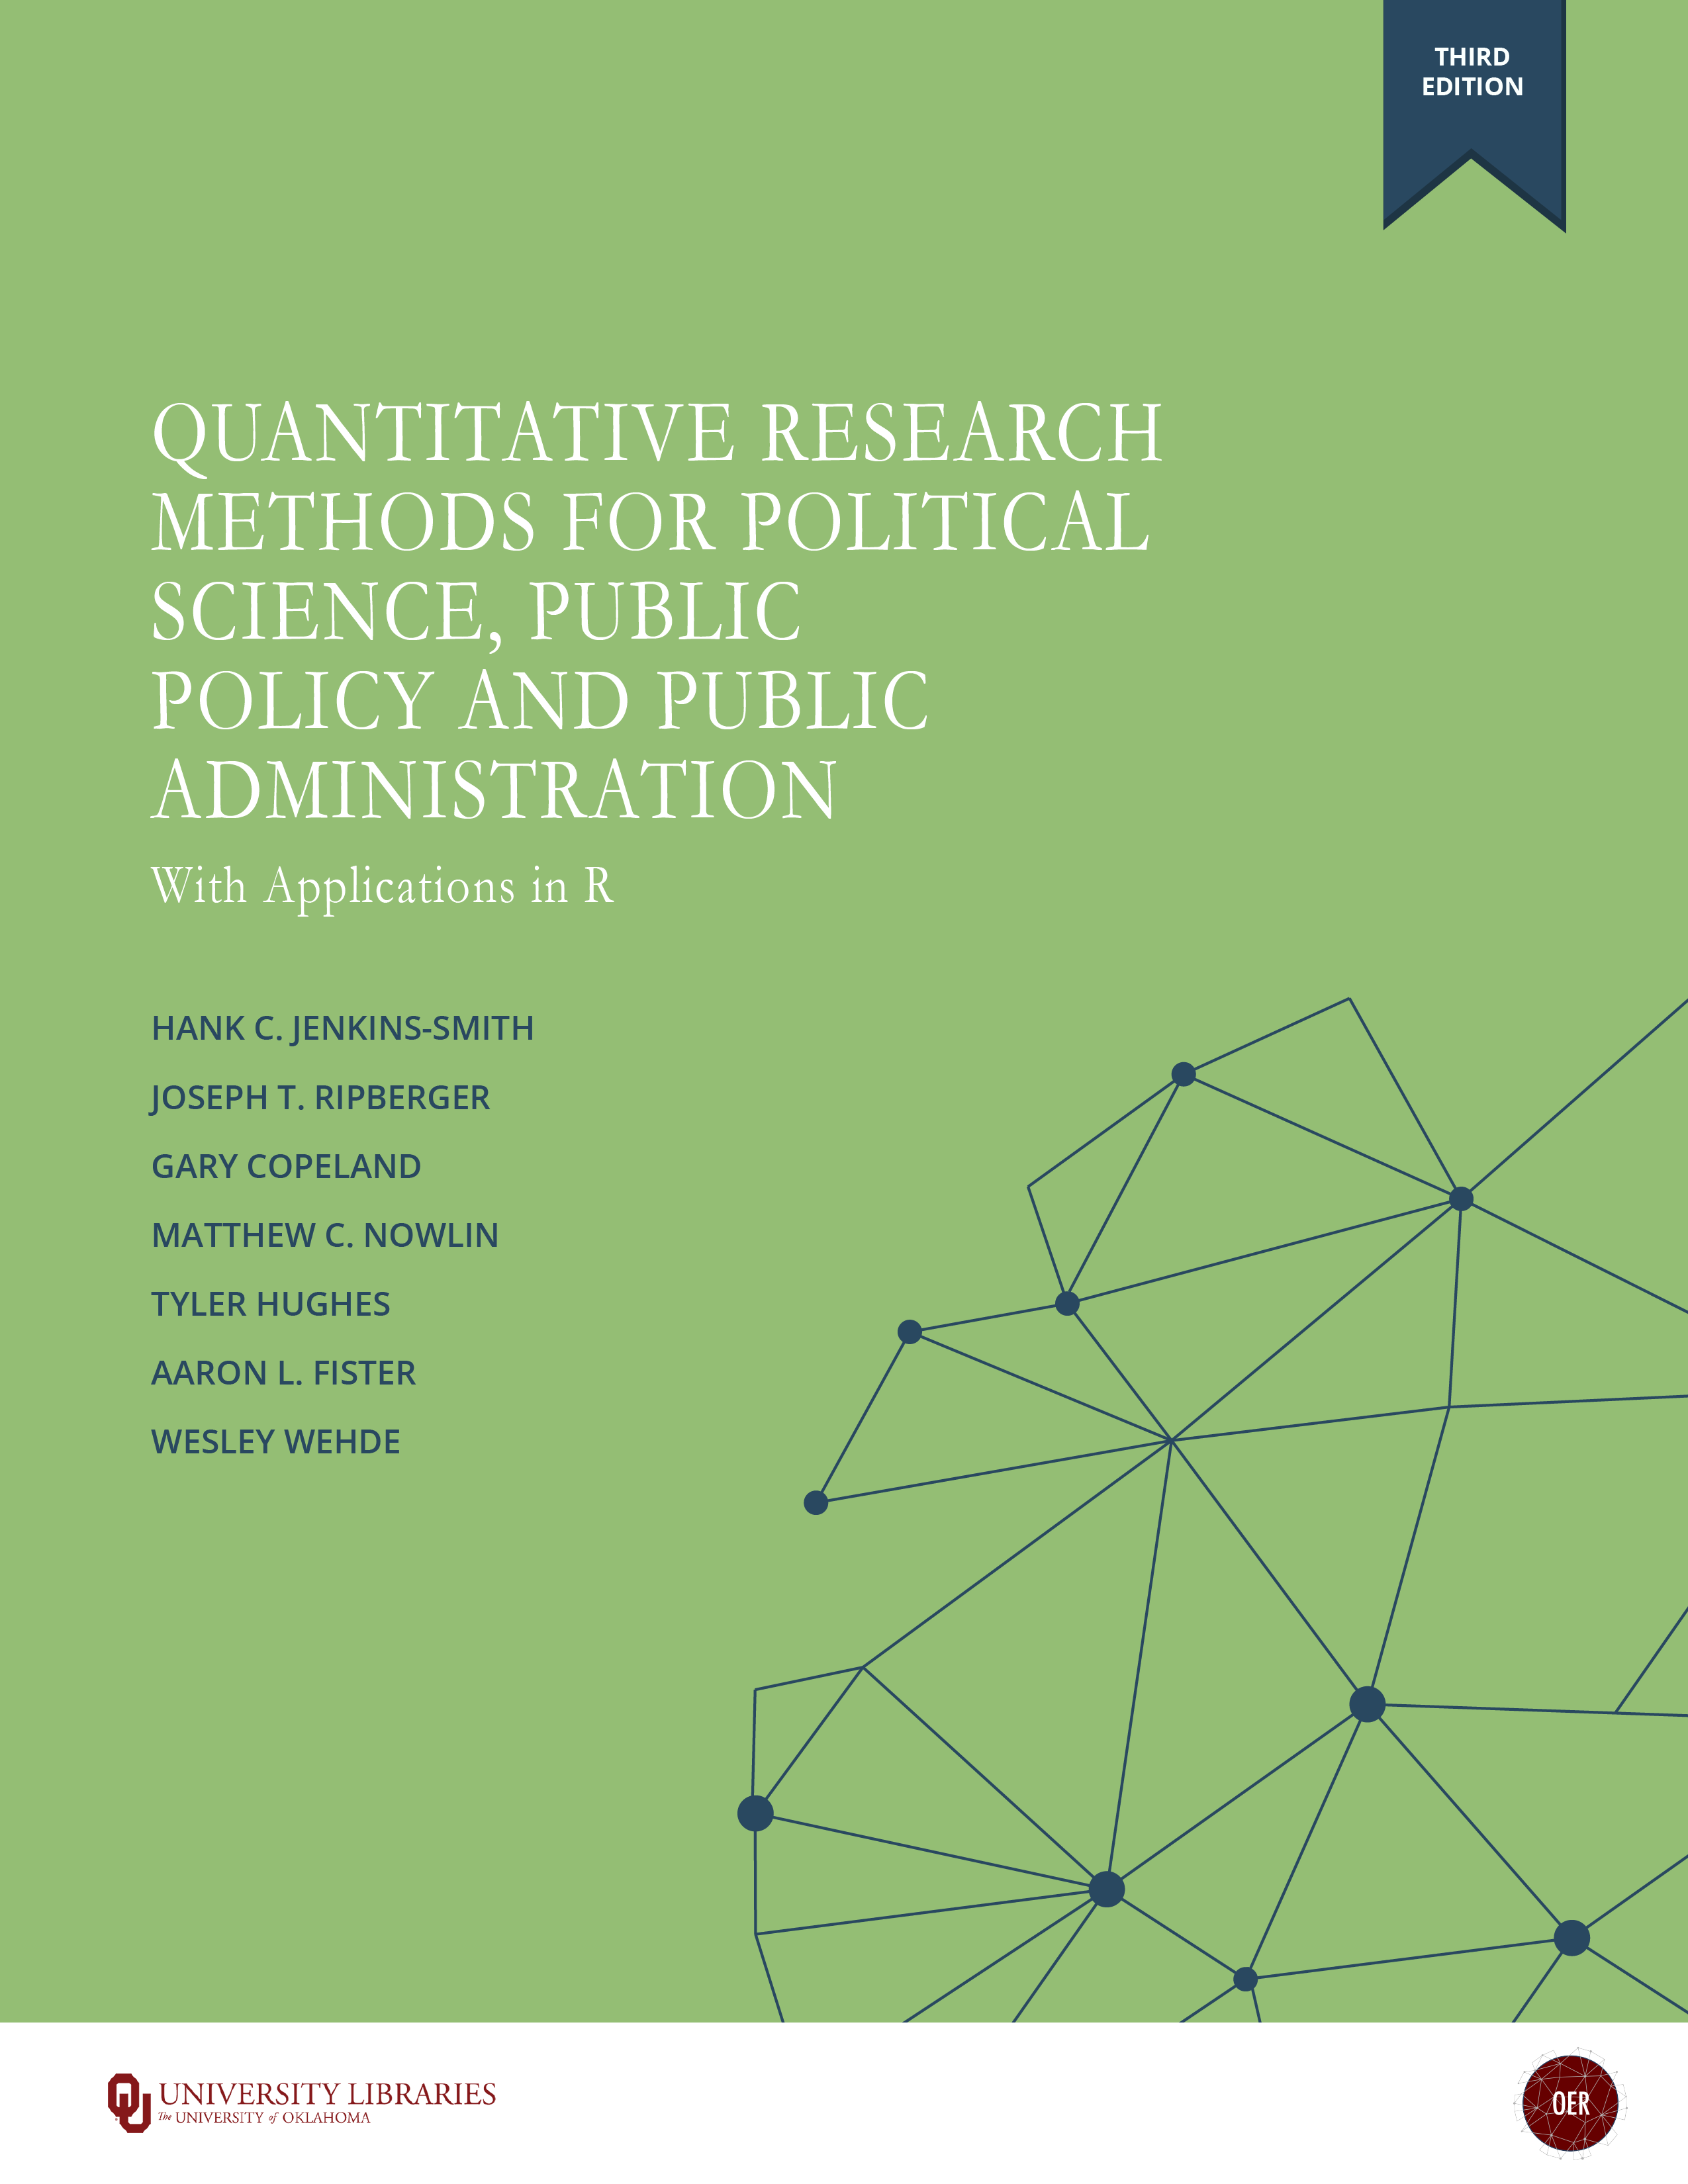 research methods for political science quantitative and qualitative methods pdf